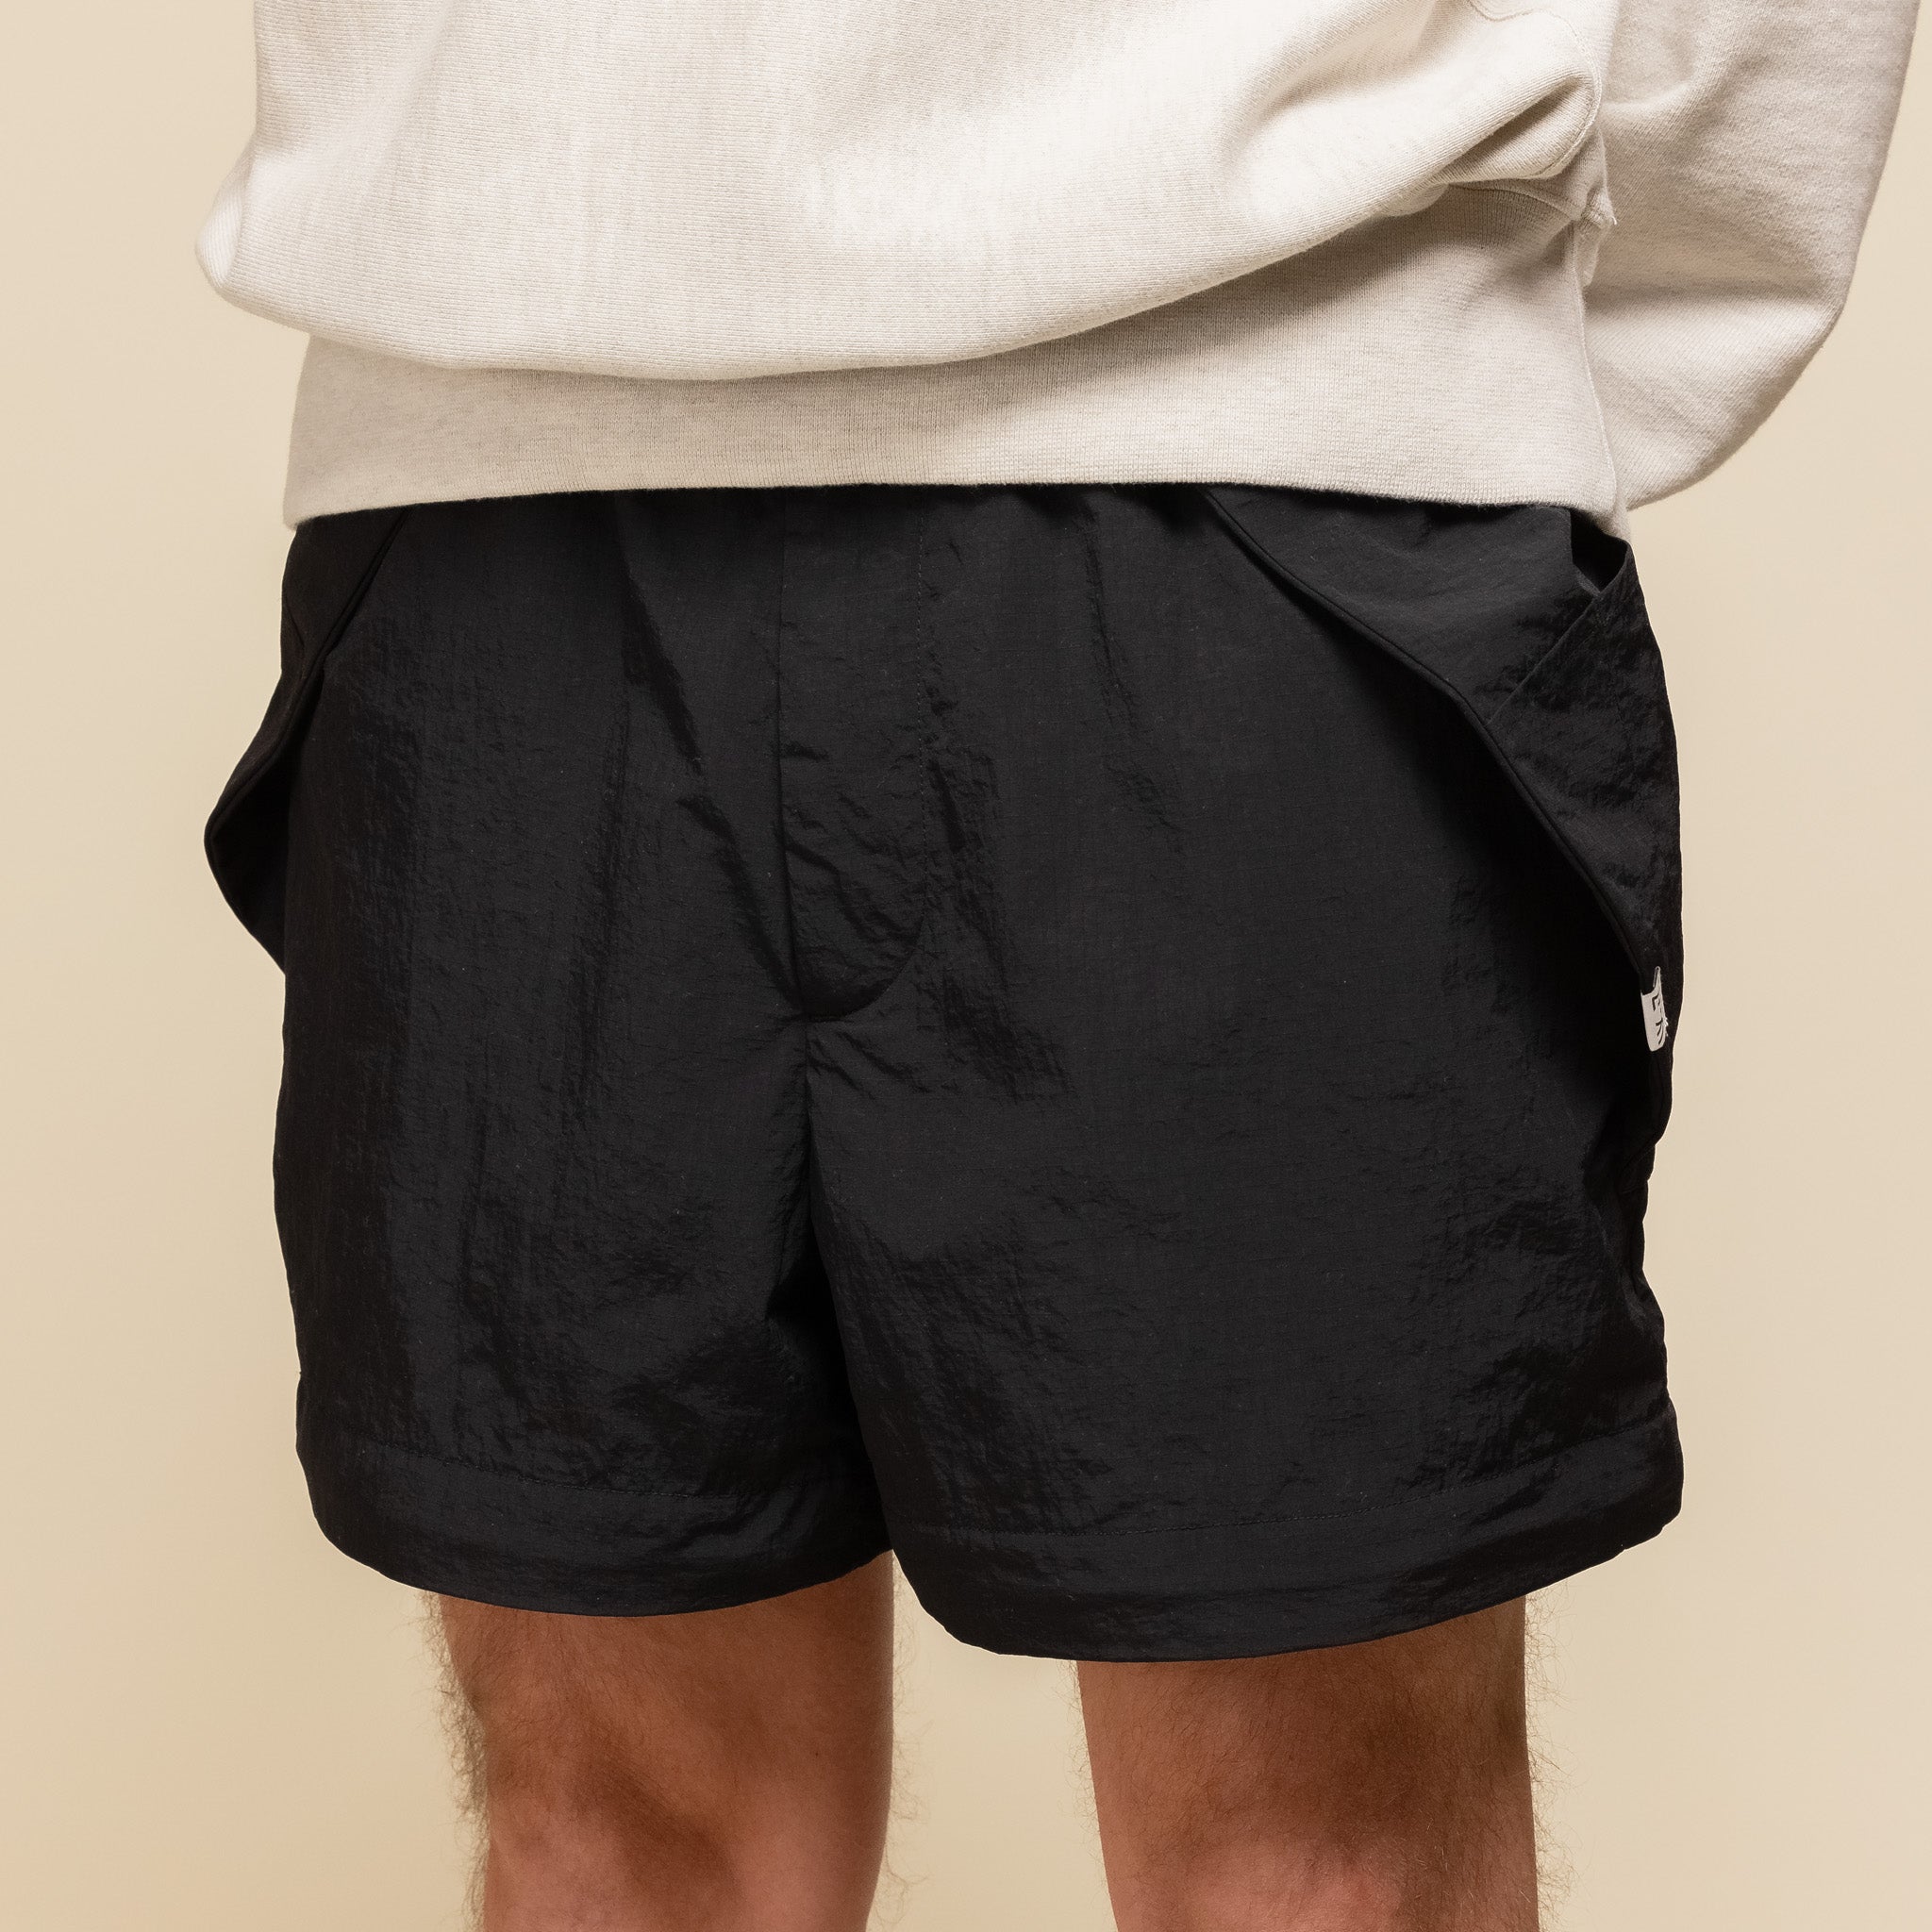 CMF Comfy Outdoor Garment - M65 Detachable "2 Way" Pants - Black